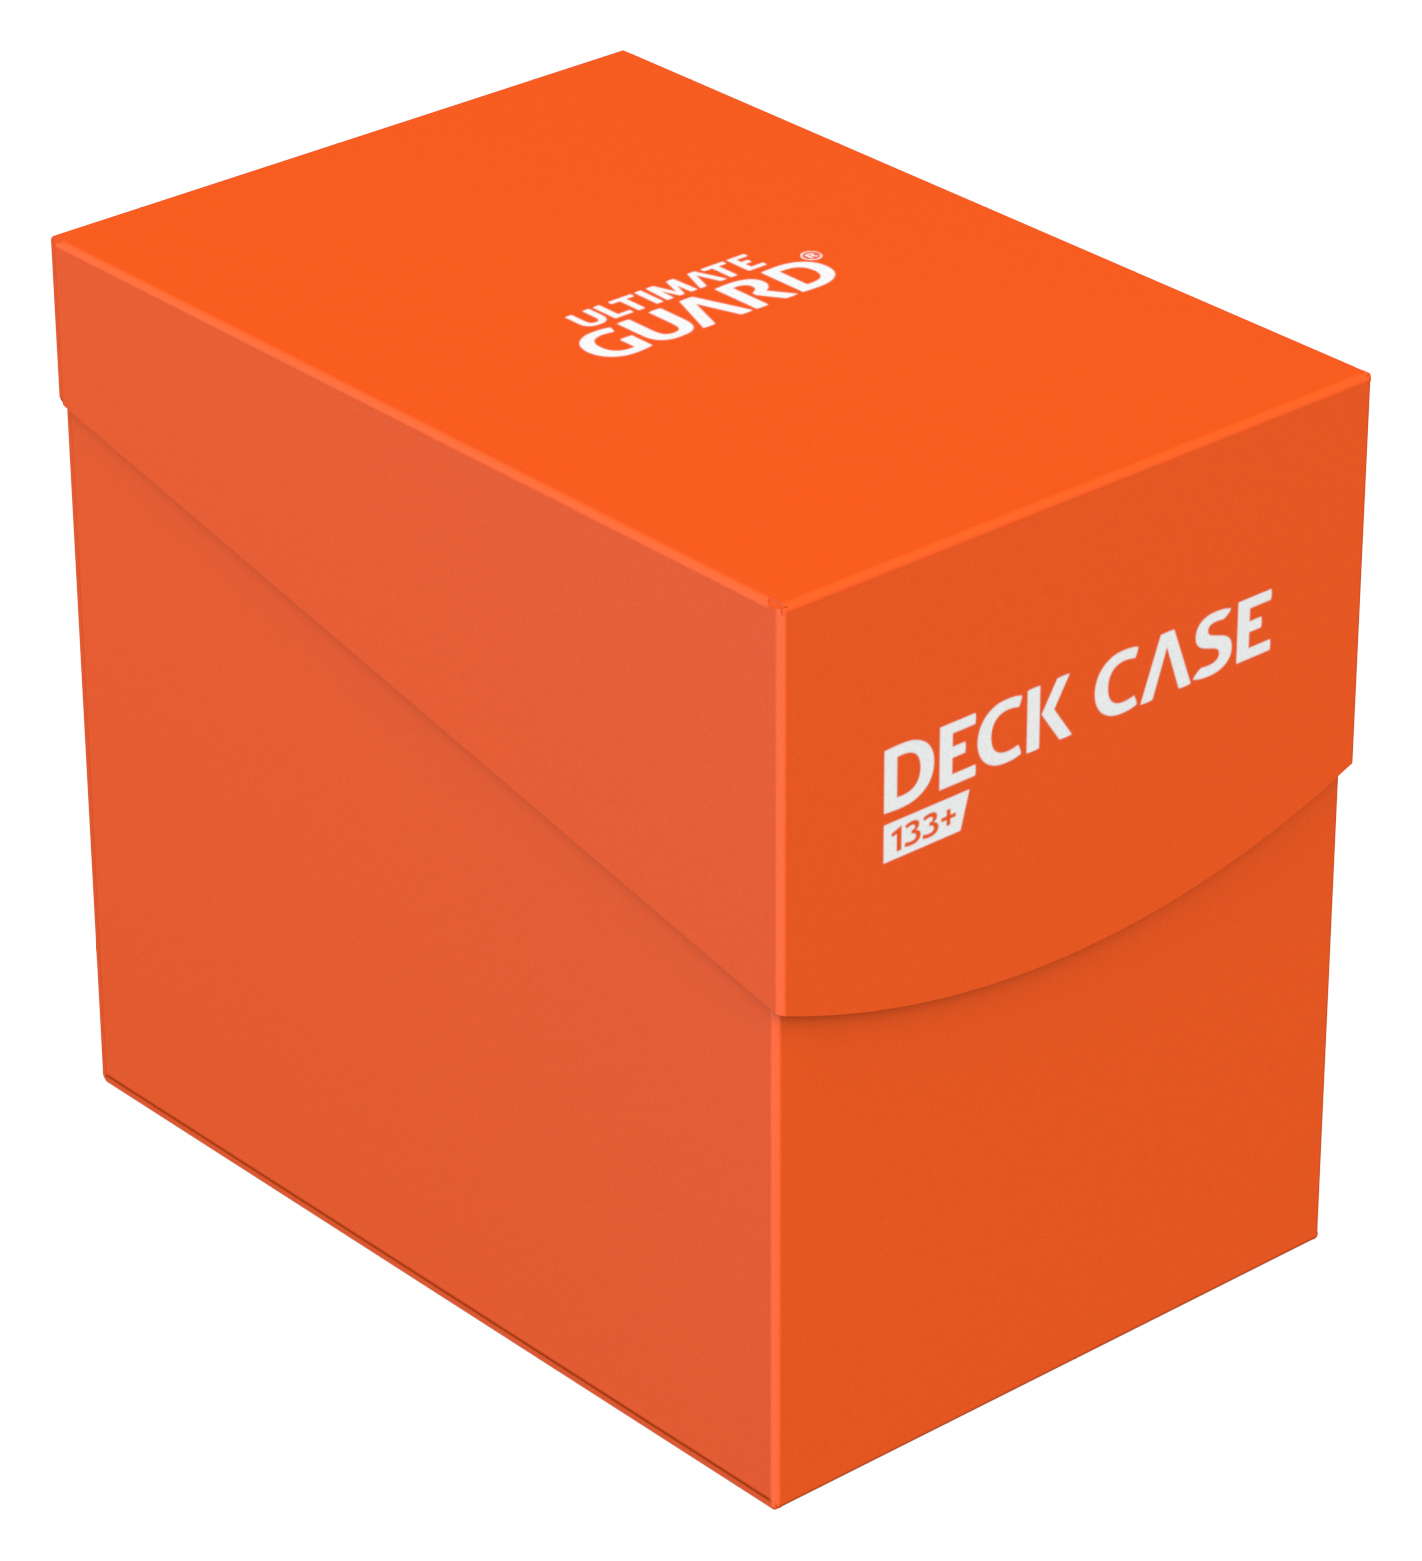 Ultimate Guard Card Deck Box Deck Case 133+ Orange